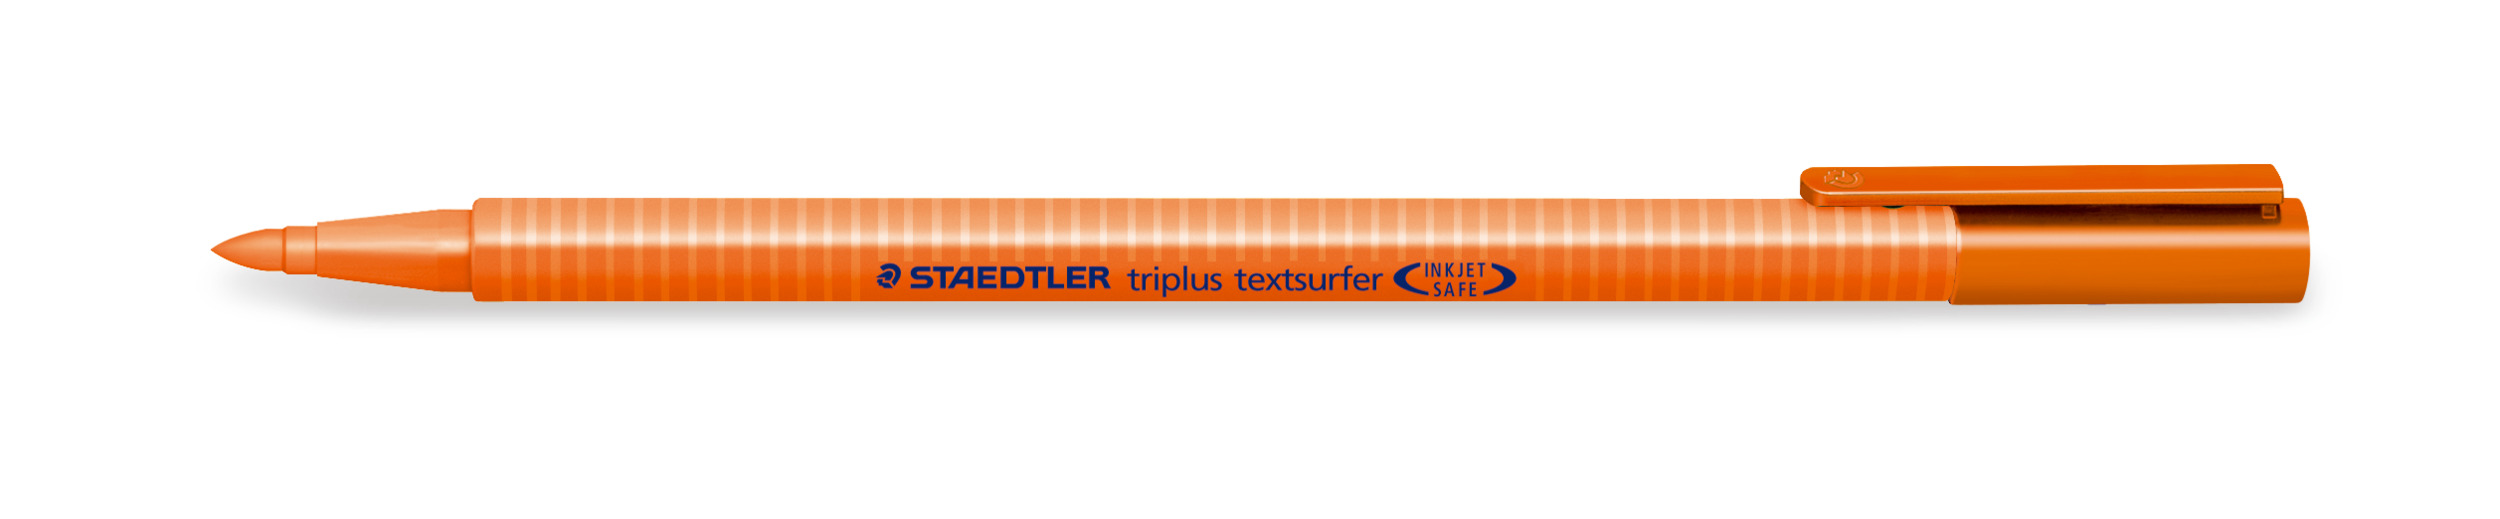 Triplus Textsurfer 362 Textmarker 1-4 mm Orange